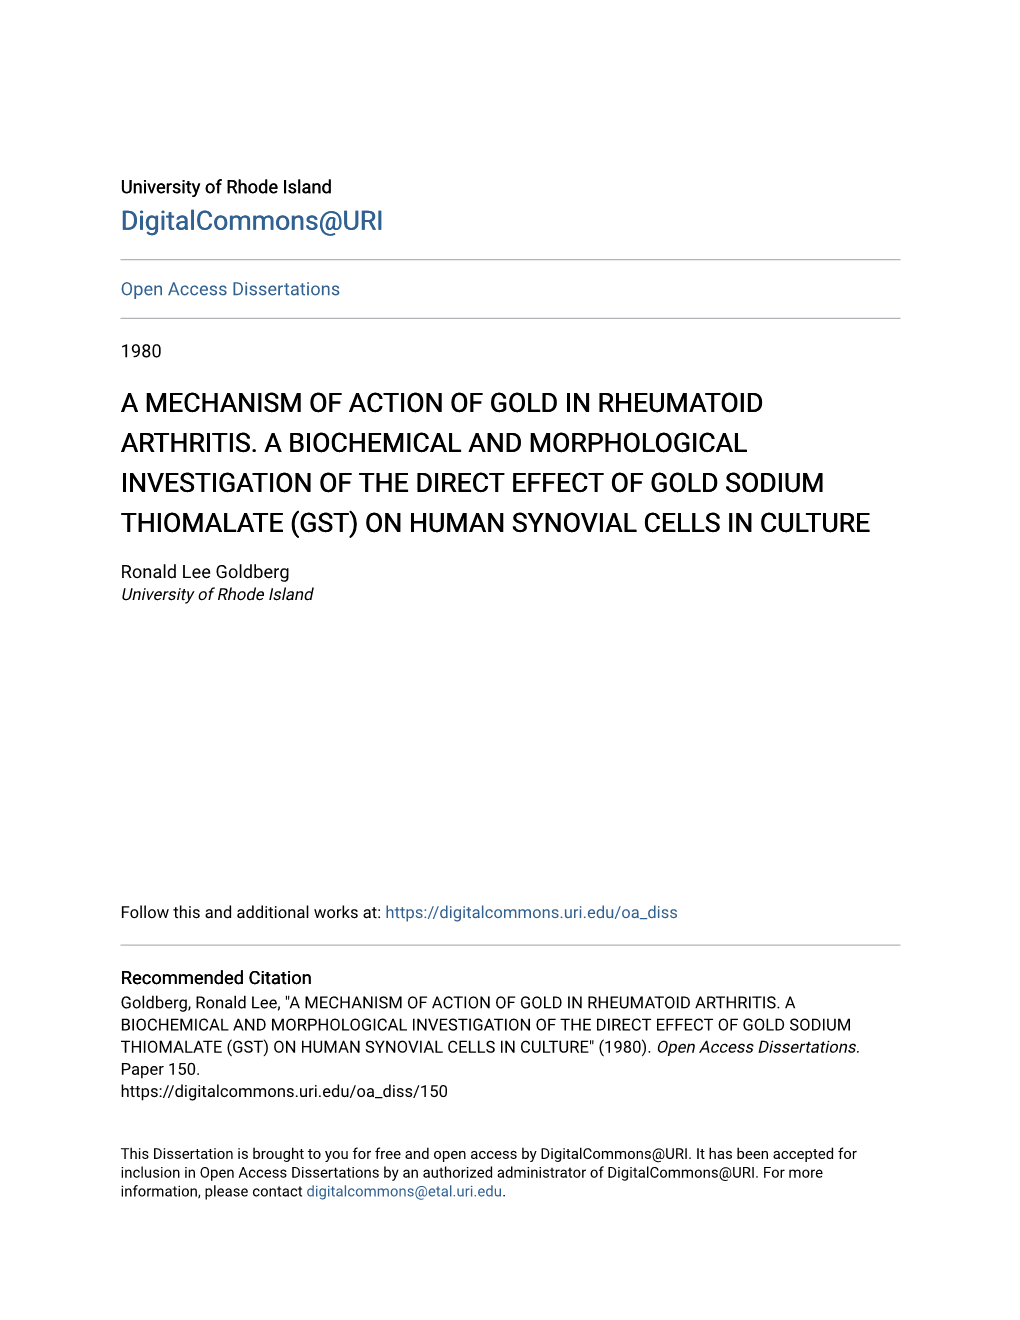 A Mechanism of Action of Gold in Rheumatoid Arthritis. A